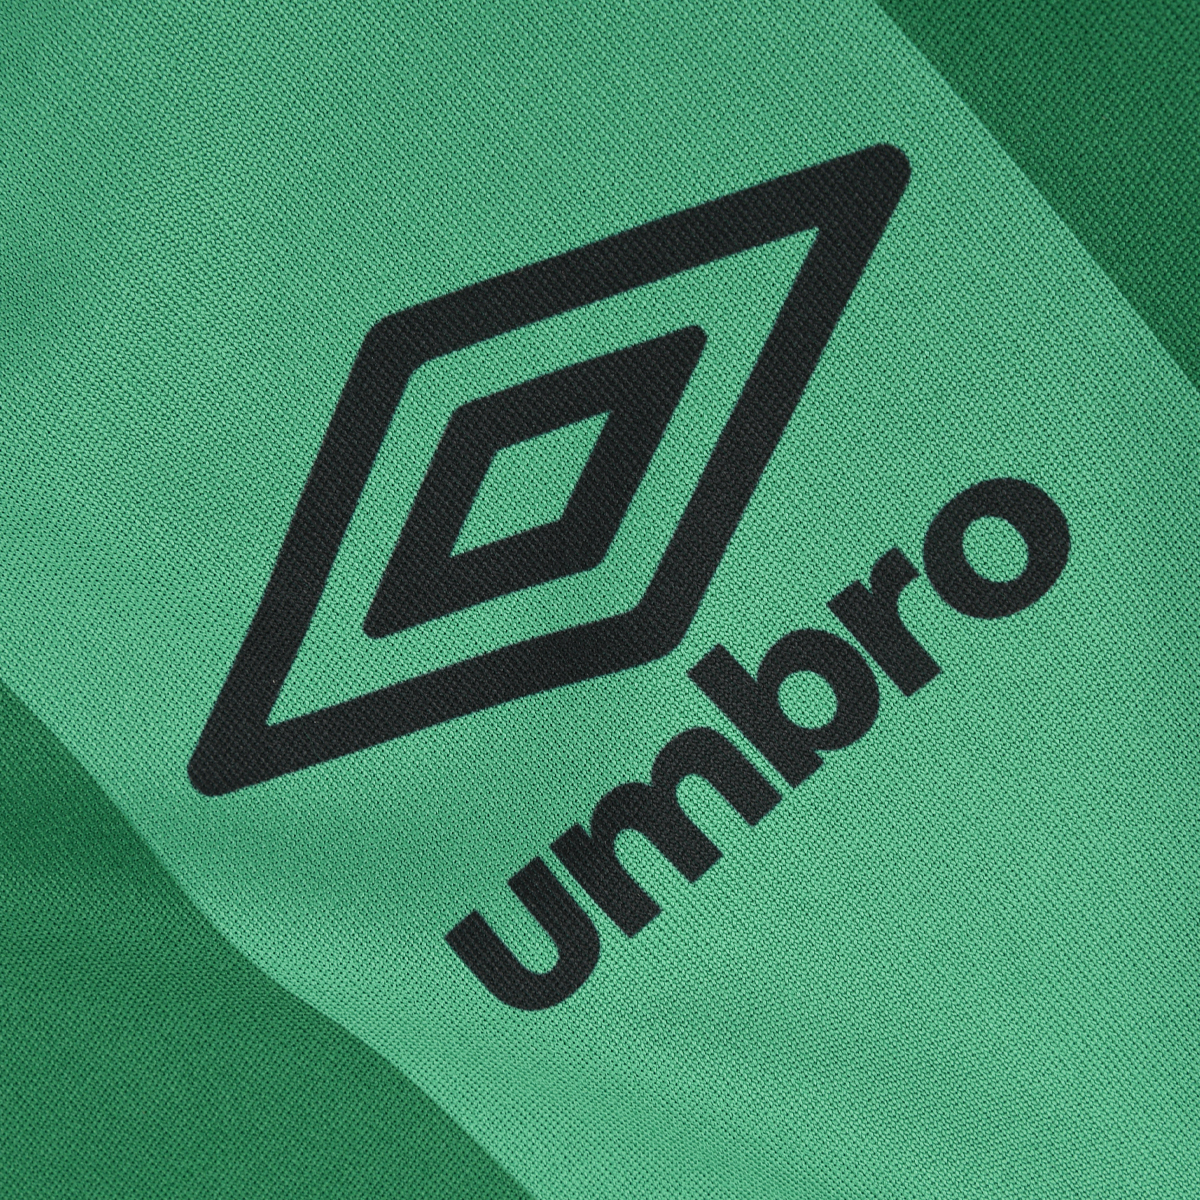 Camiseta Fútbol Umbro Stripes Unisex,  image number null